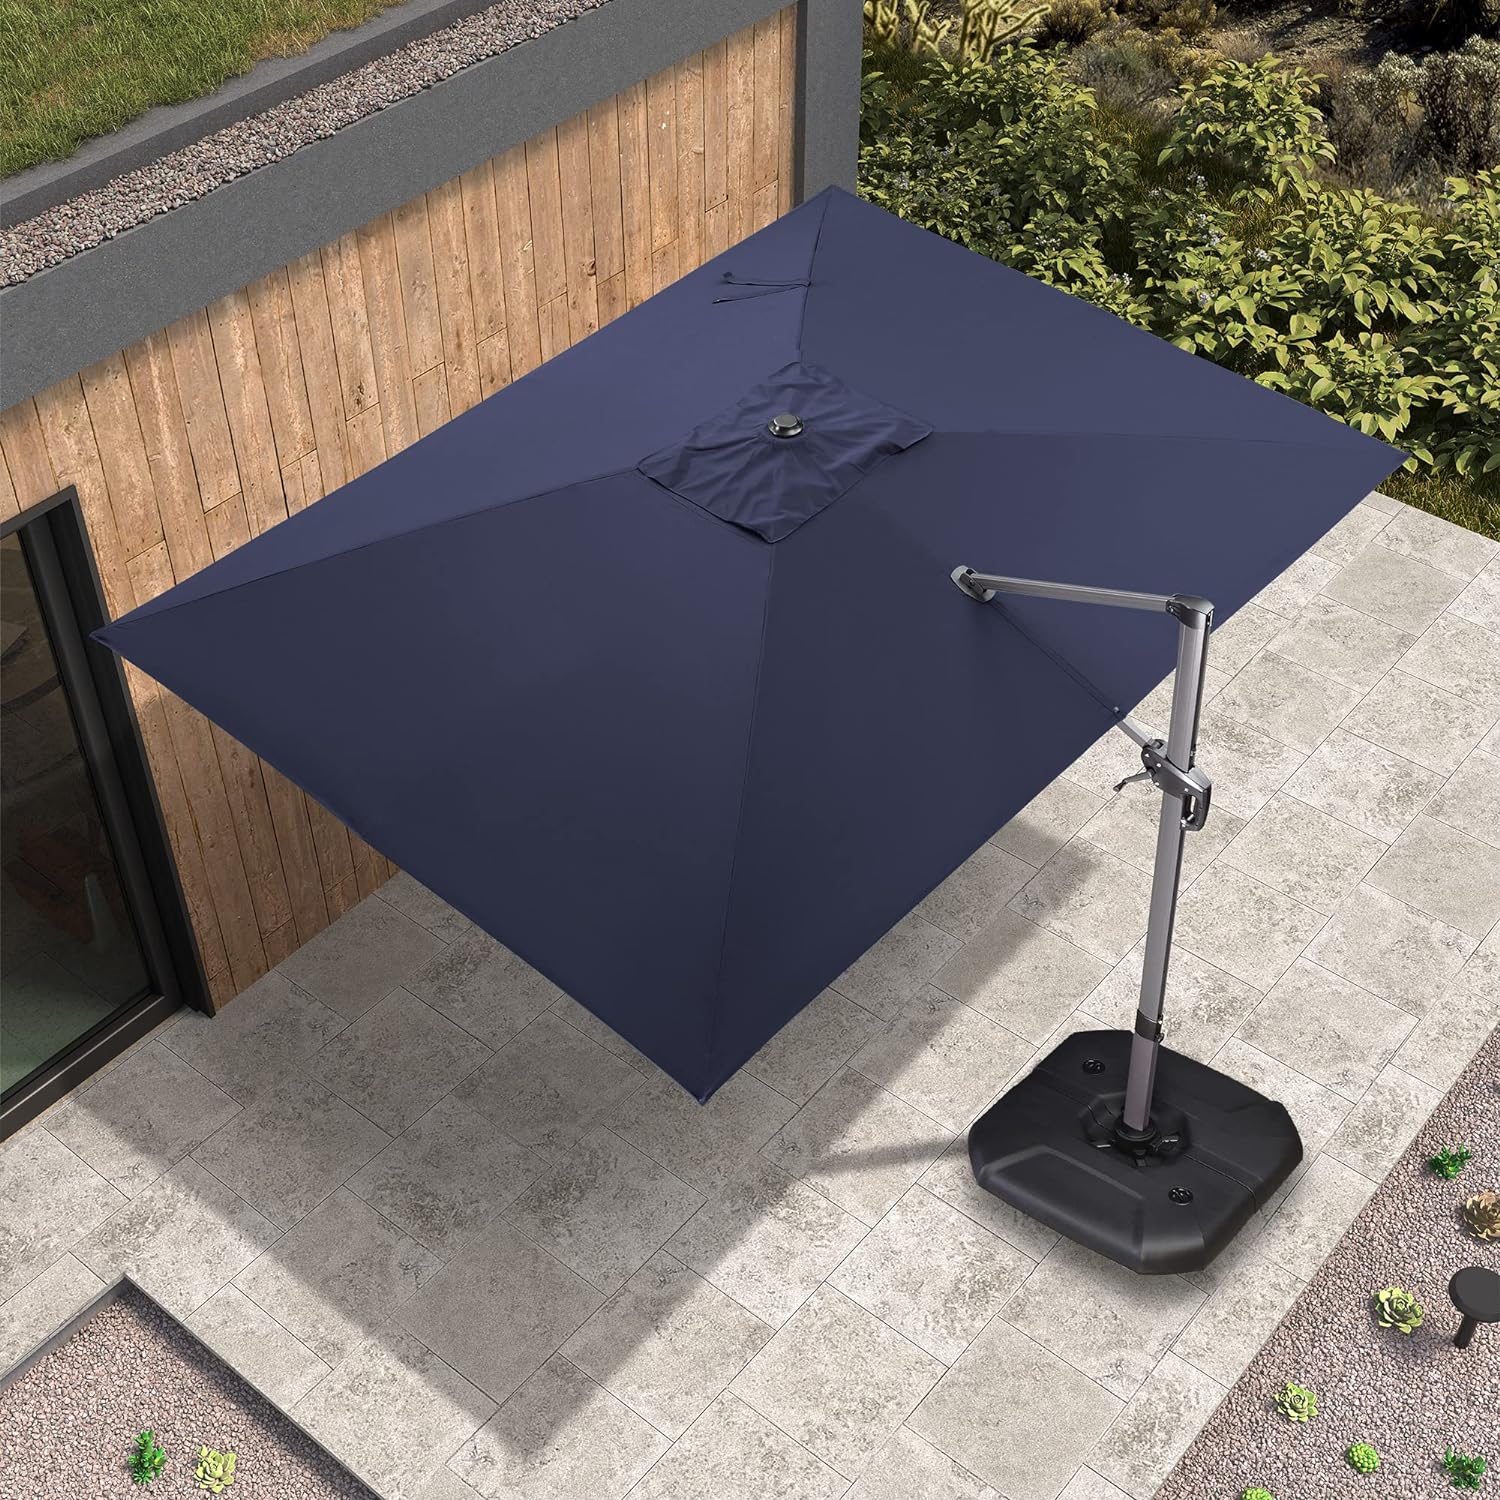 PURPLE LEAF 9 ft x 11.5 ft Aluminum 360-degree Rotation Offset Cantilever Umbrella Patio Outdoor Umbrella for Garden Deck Pool Patio, Navy Blue